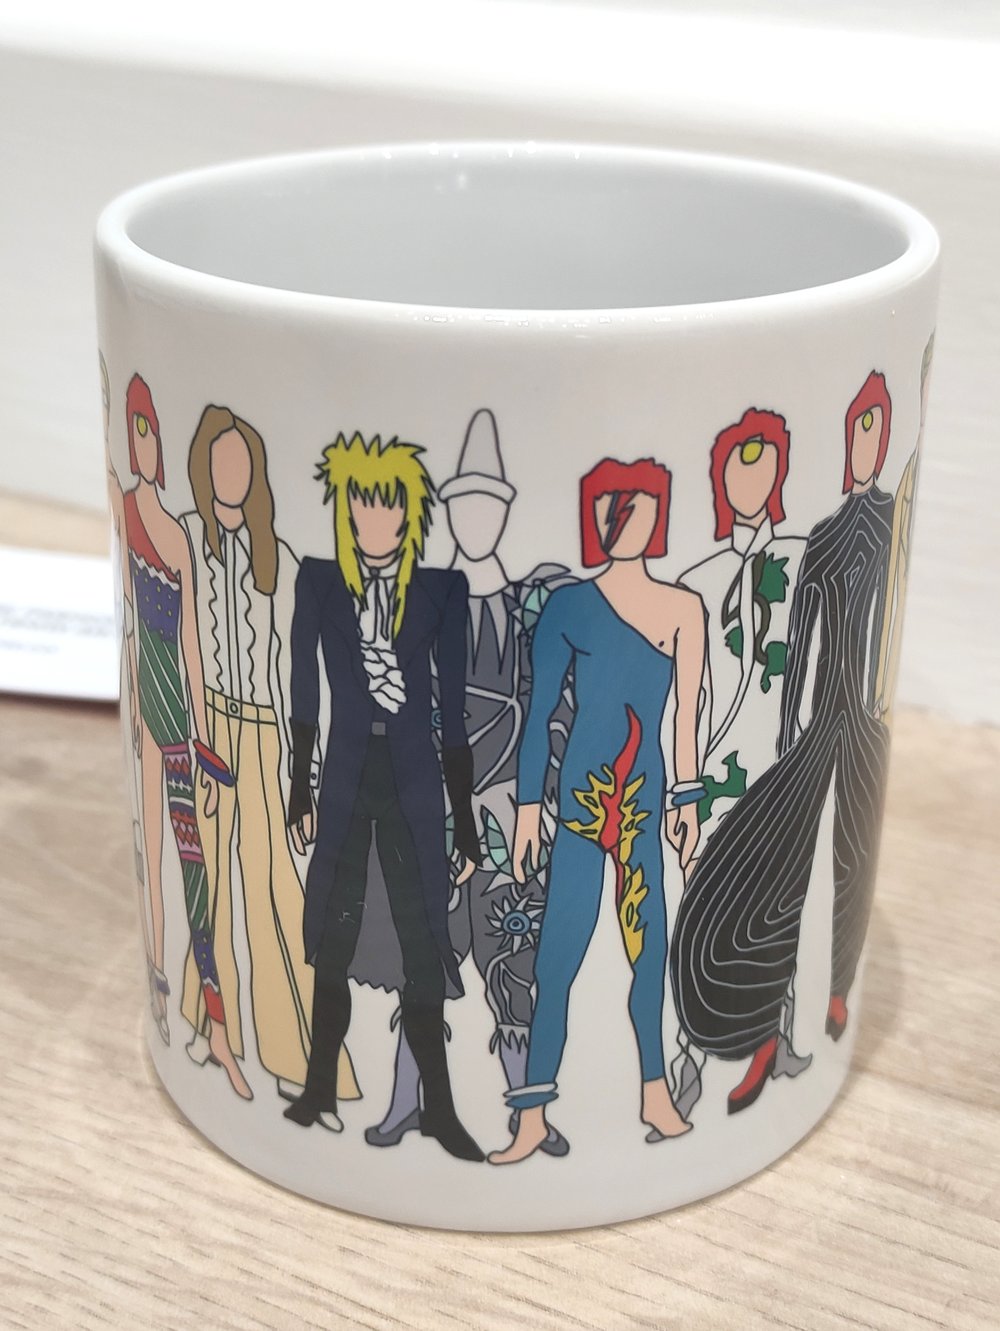 David Bowie Fashion Mug